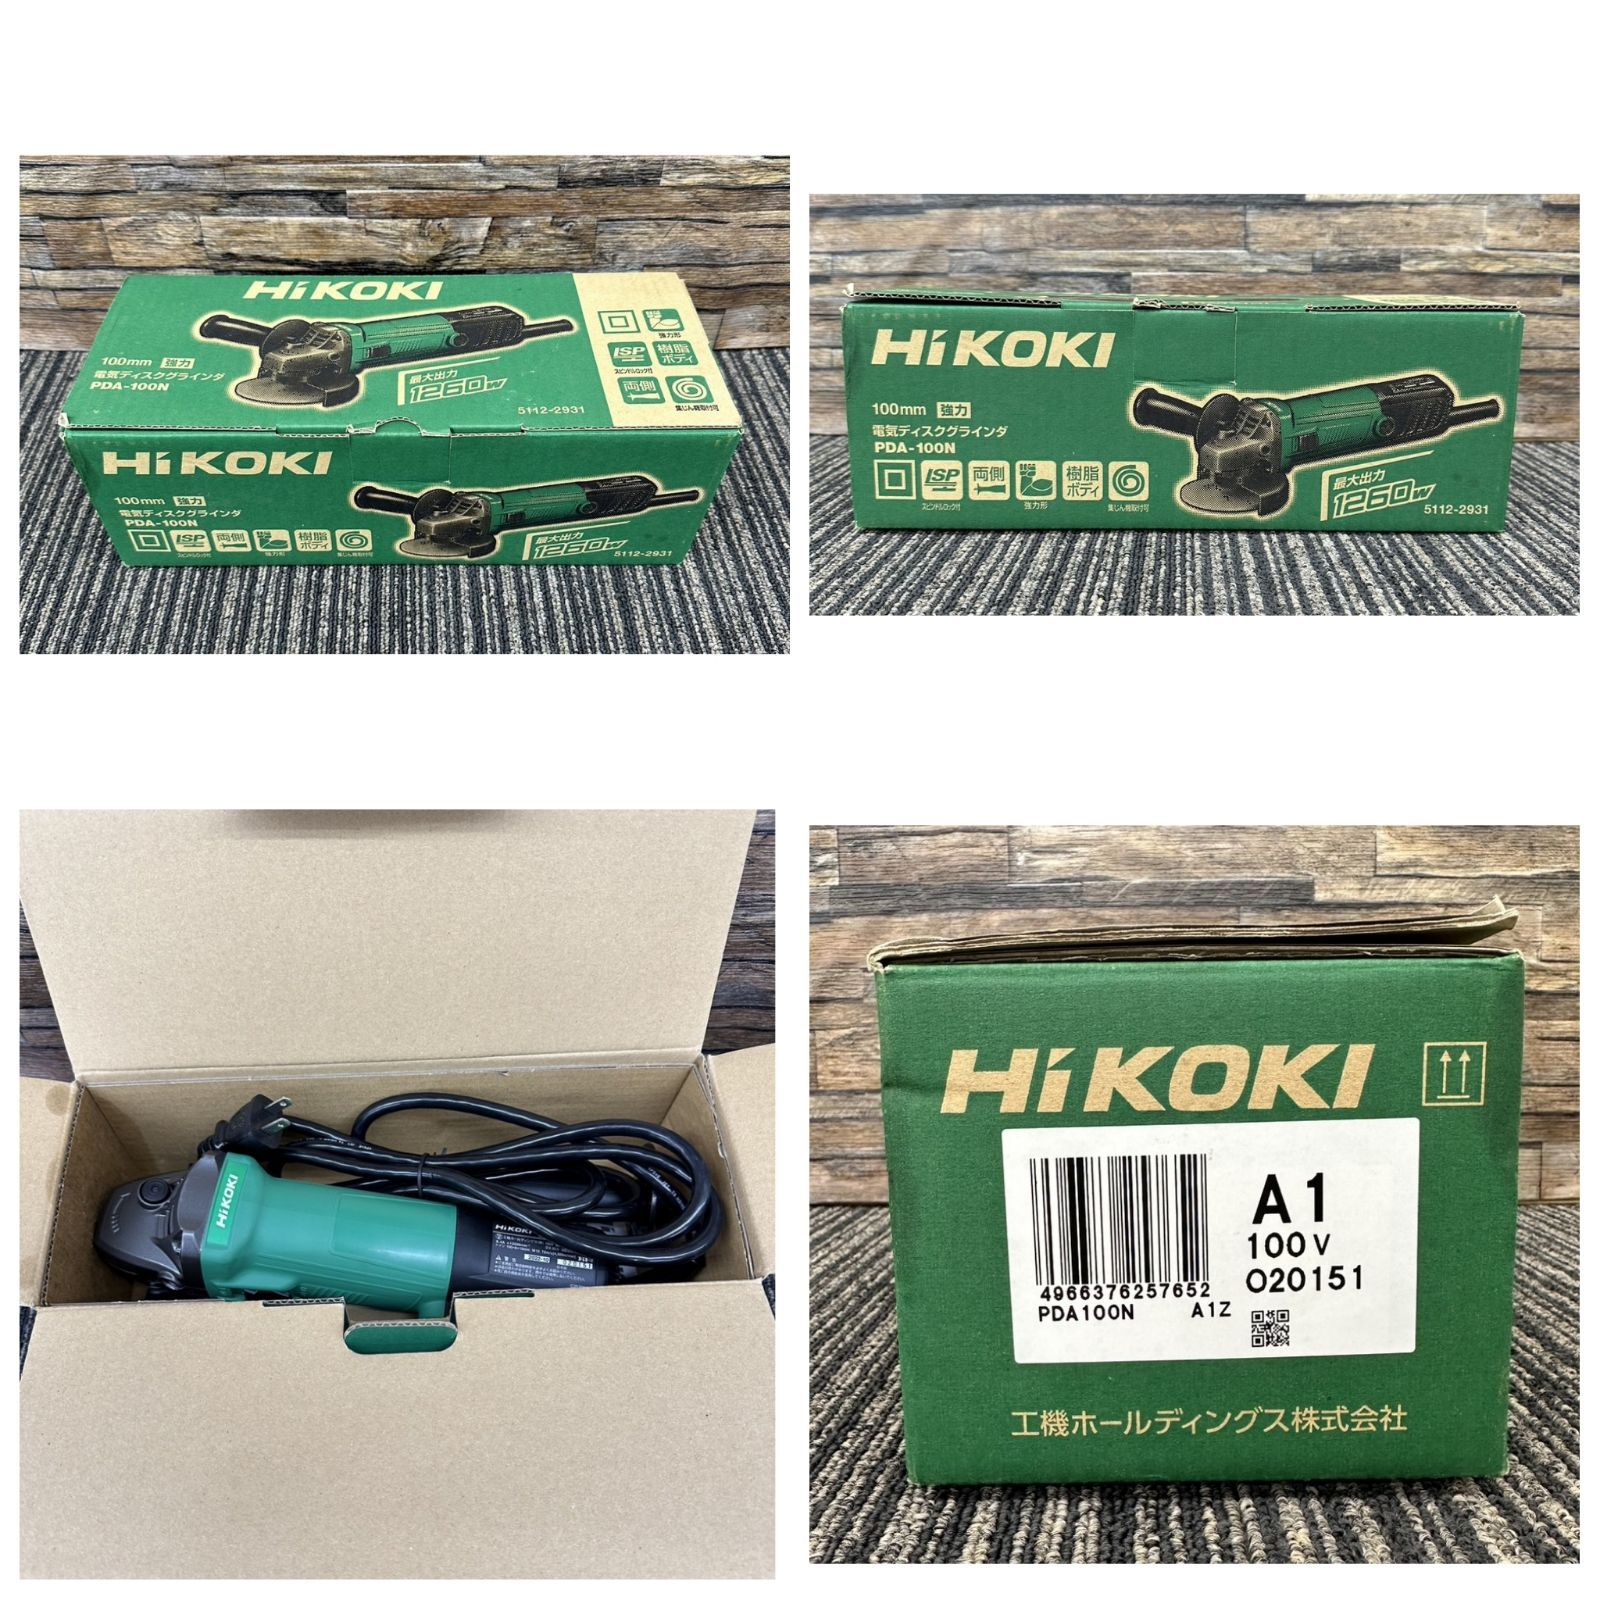 HiKOKI 電気ディスクグラインダ PDA-100N (2312161)|mercari